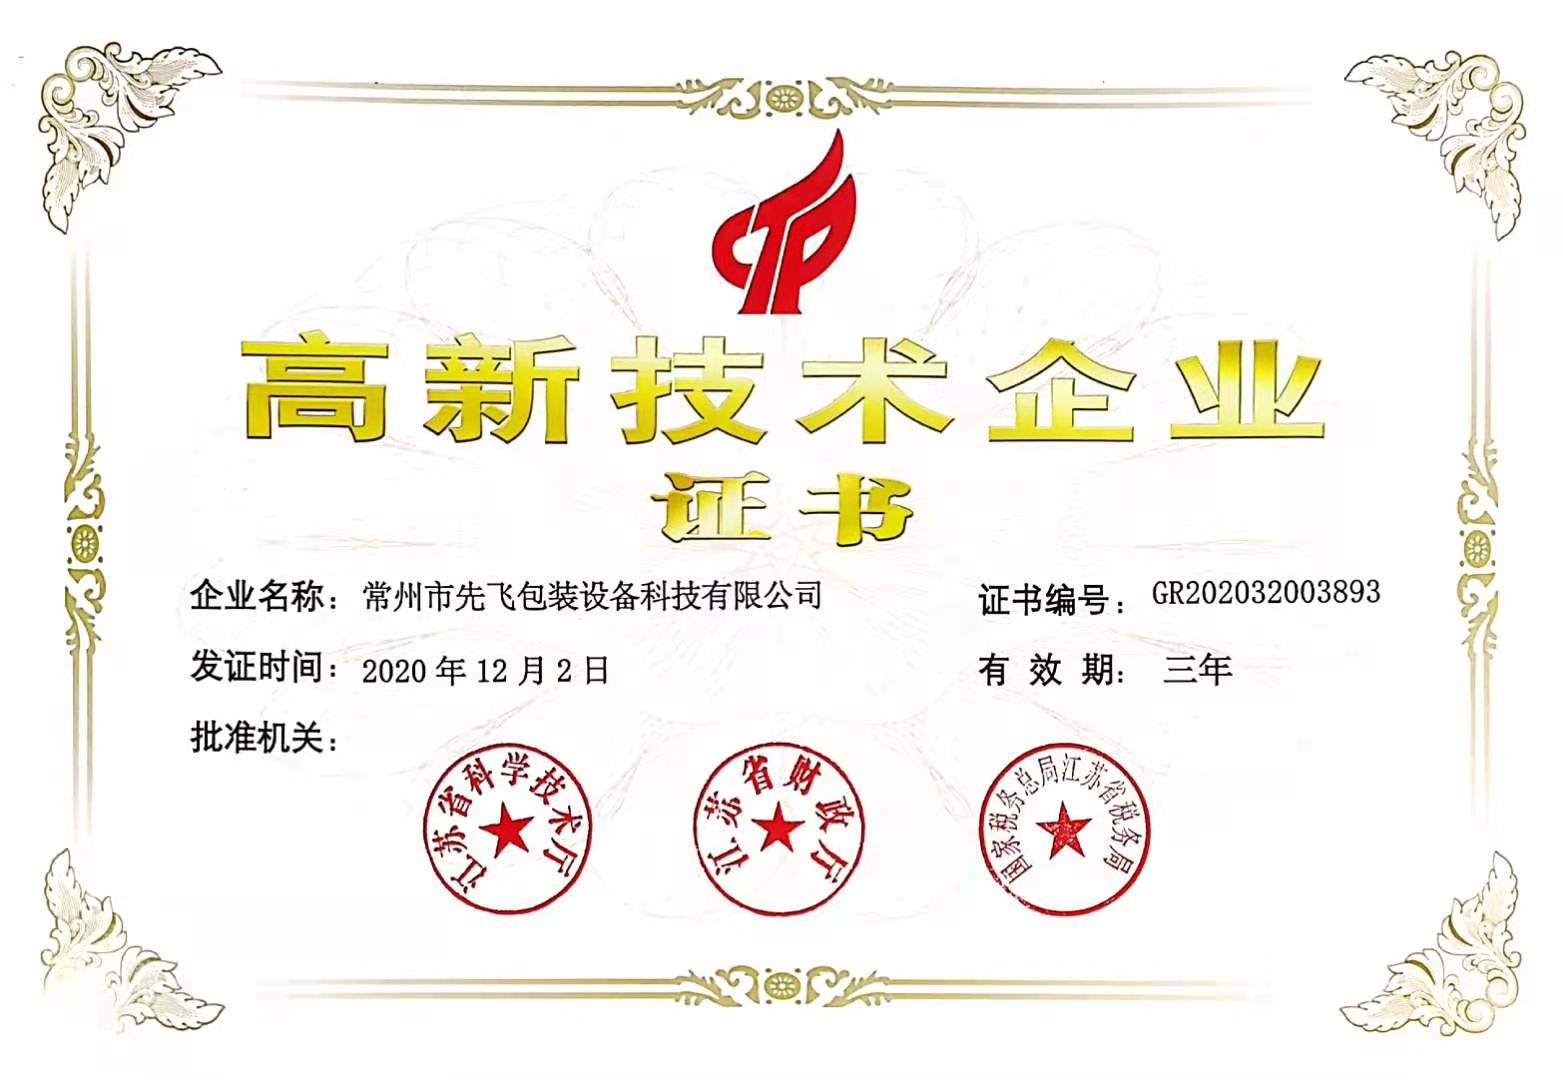 Китай Changzhou Xianfei Packing Equipment Technology Co., Ltd. Сертификаты